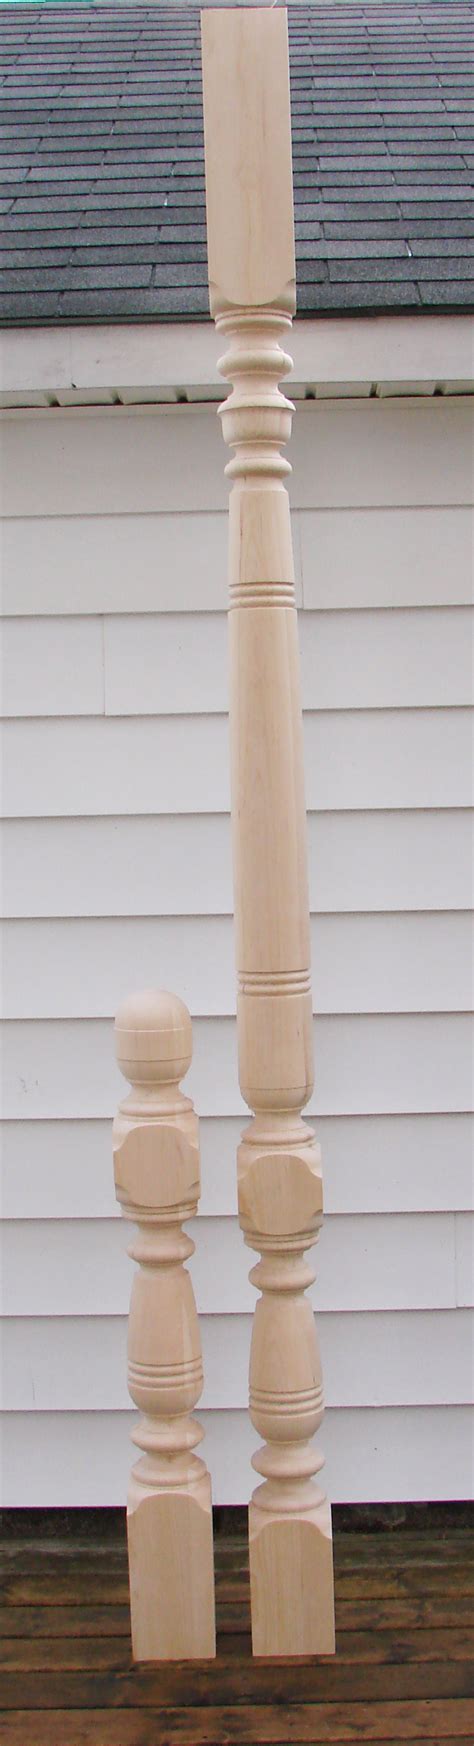 Custom Porch Post and matching Newel Post. | Porch posts, Custom porch ...